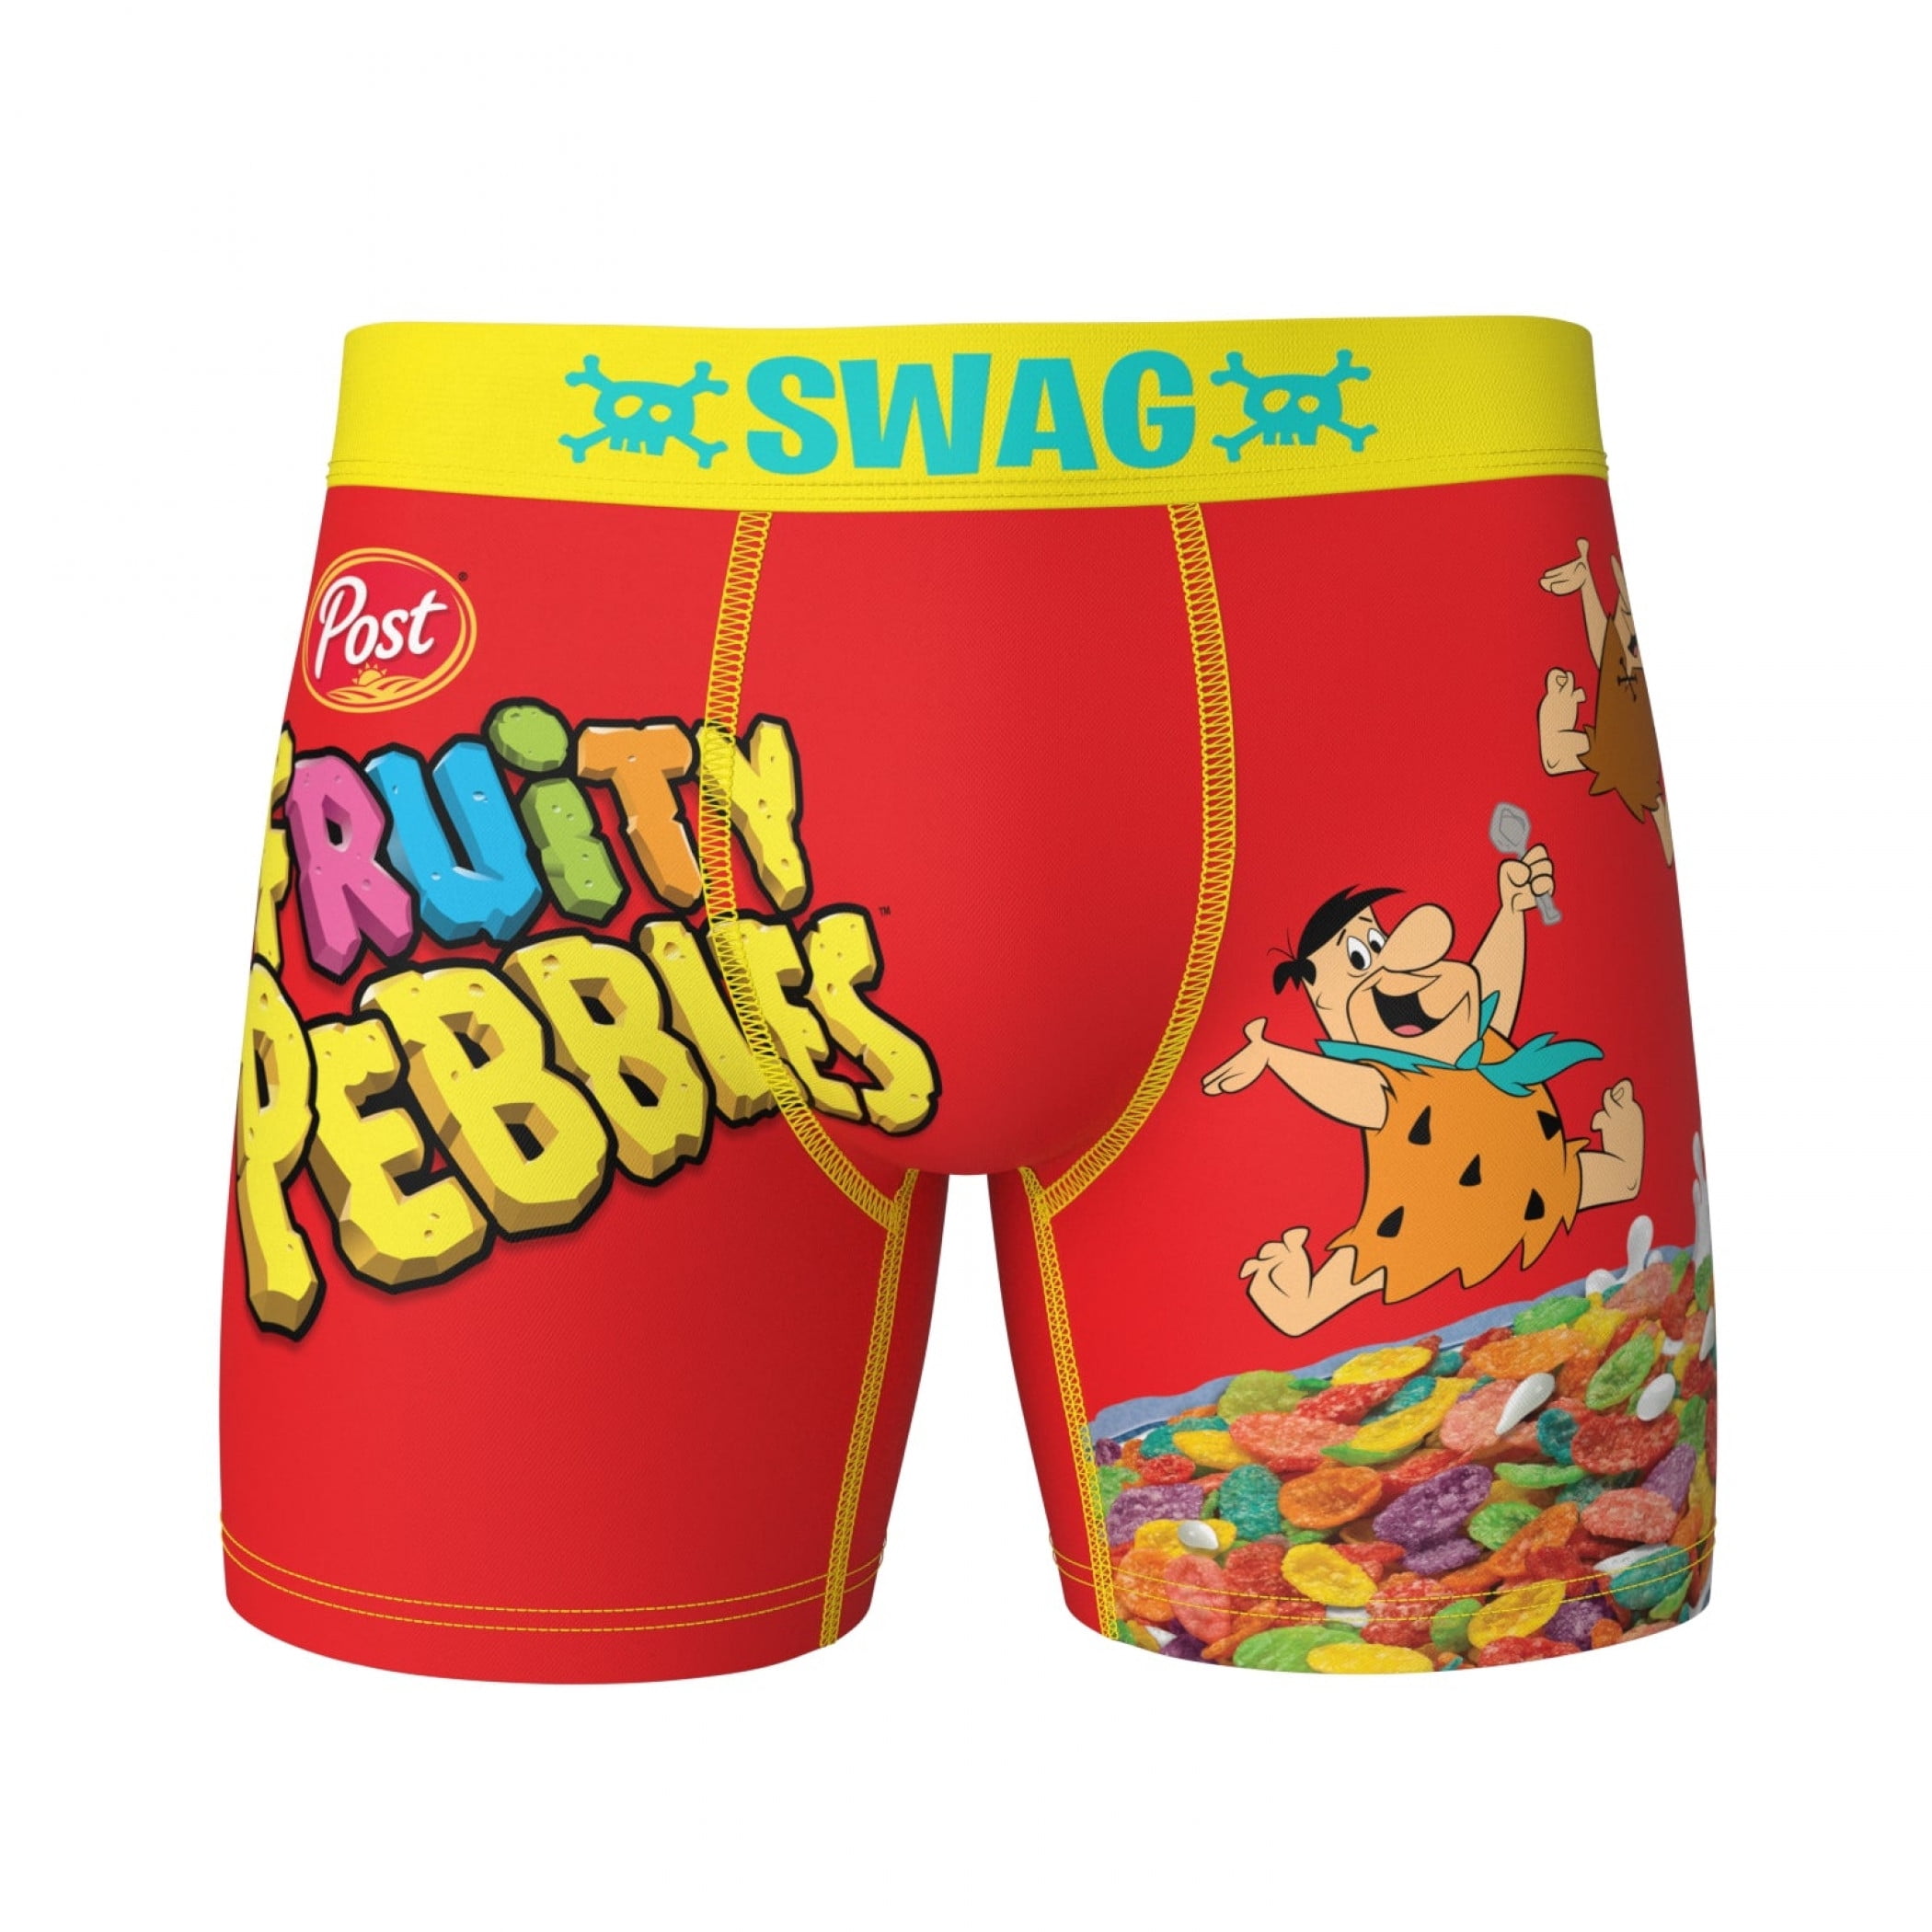 Flintstones 847043-um-32-34 32 - 34 in. Post Fruity Pebbles Cereal Box  Style Swag Boxer Briefs - Medium